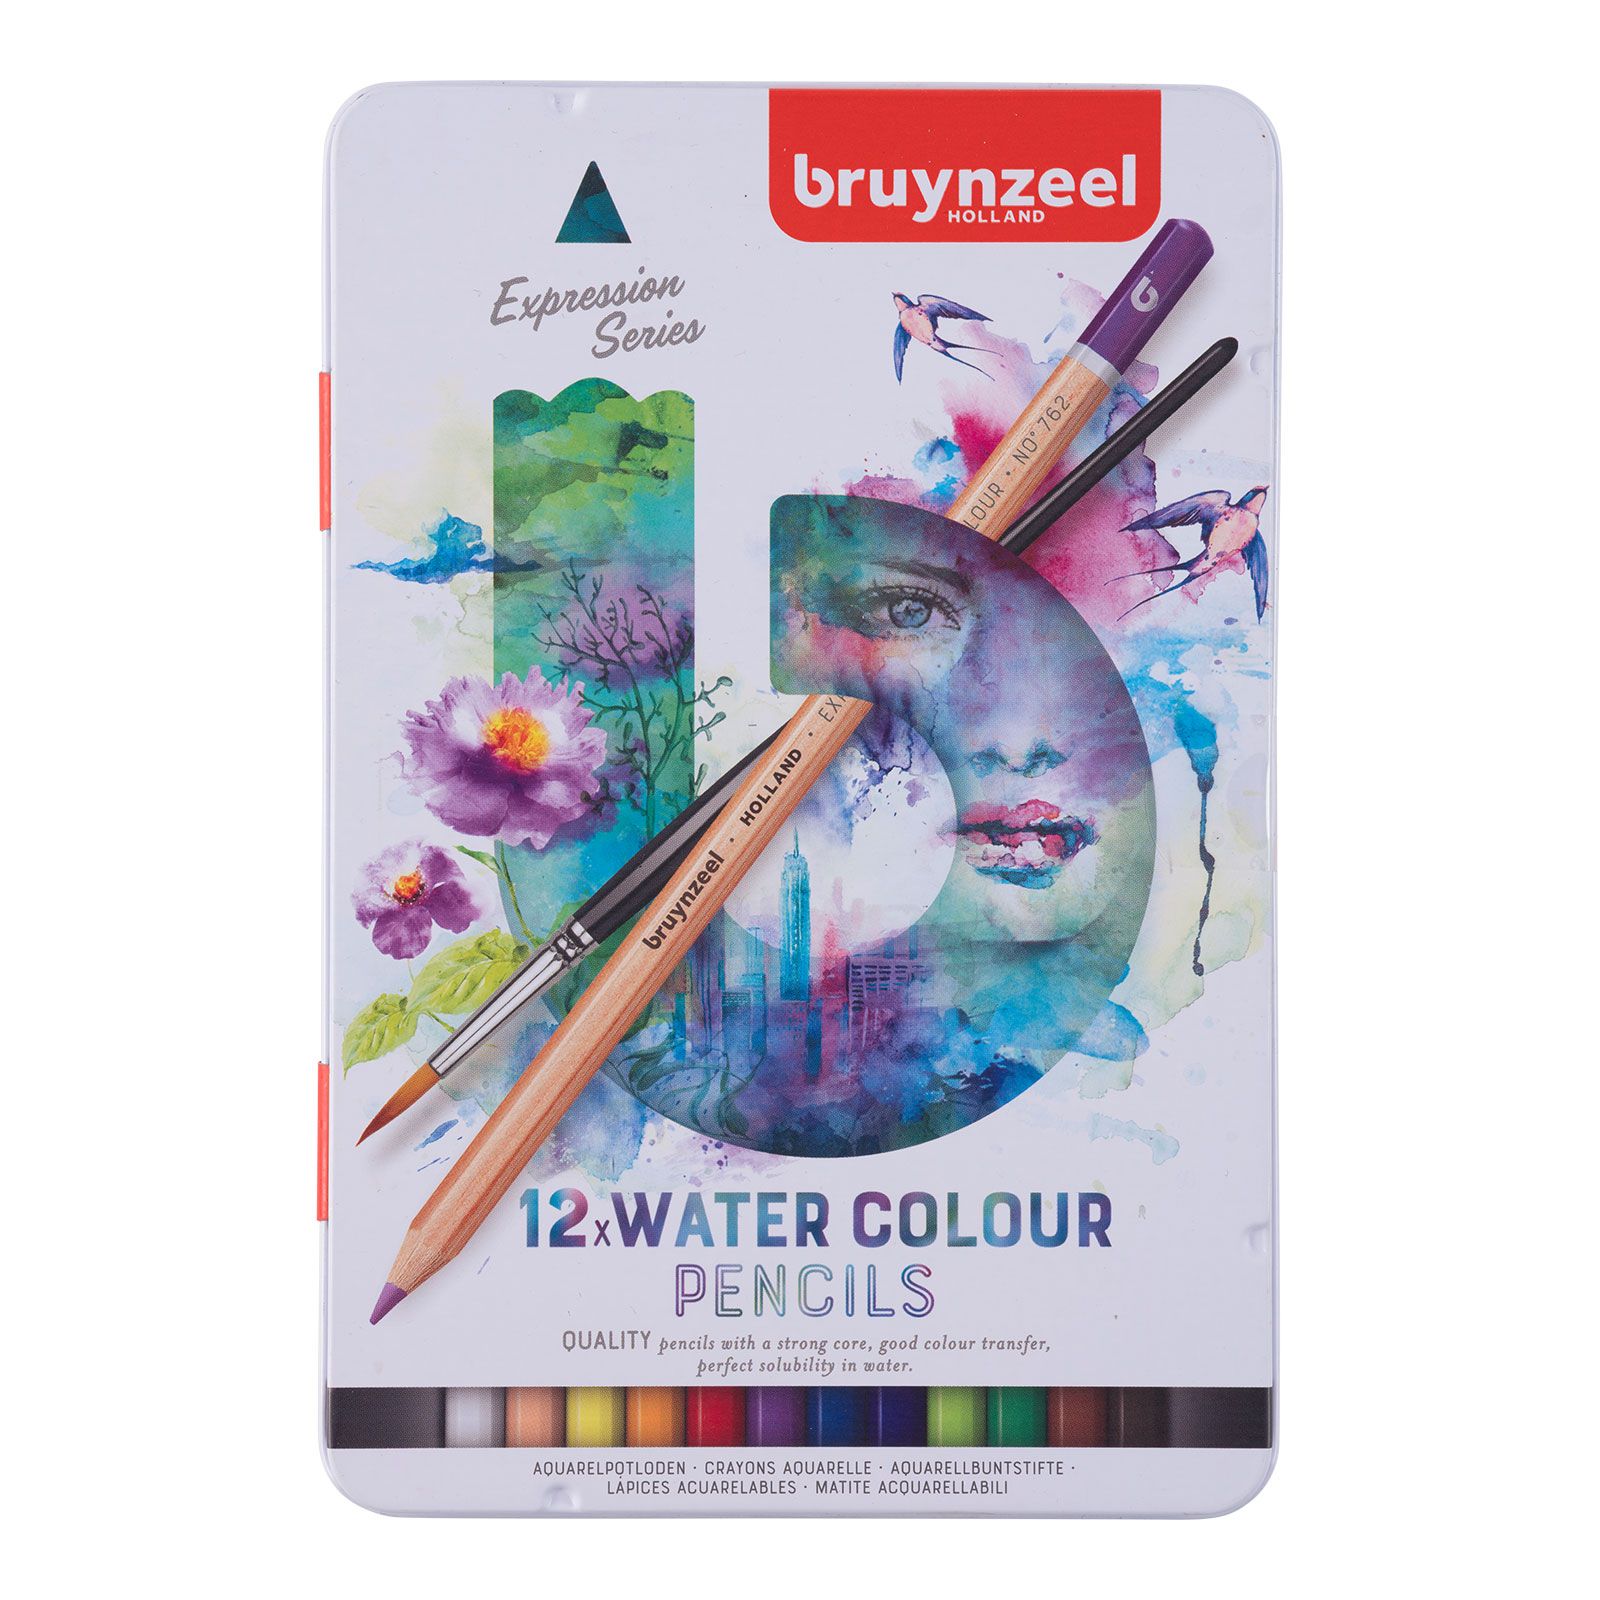 Bruynzeel • Expression watercolour pencils Tin 12